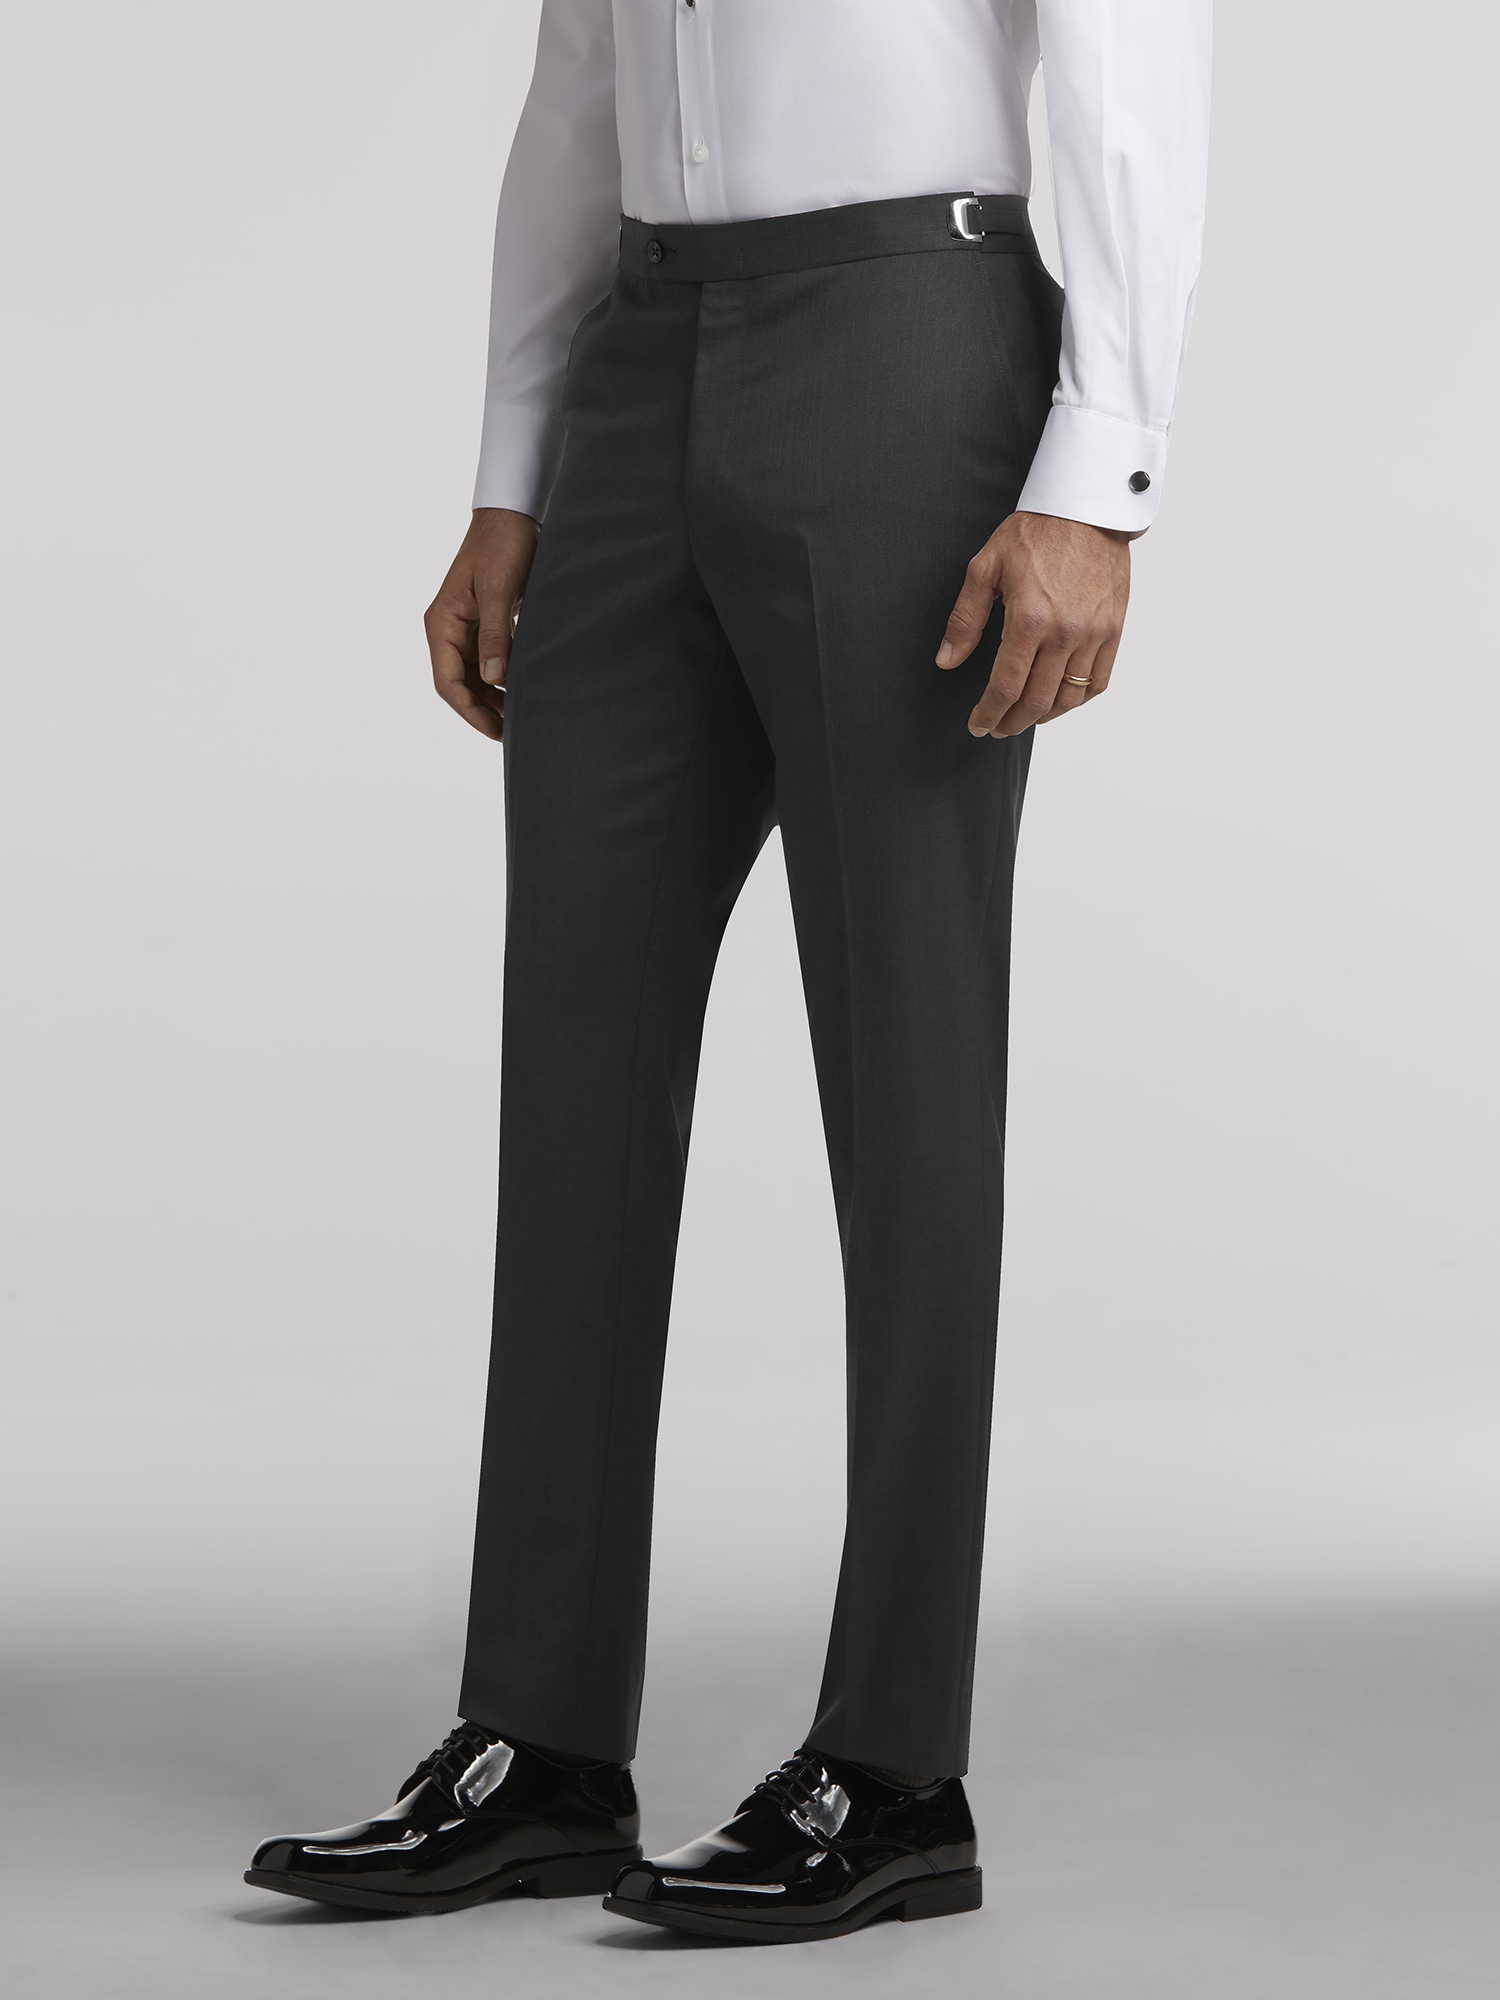 Performance Grey Tux by Calvin Klein | Tuxedo Rental